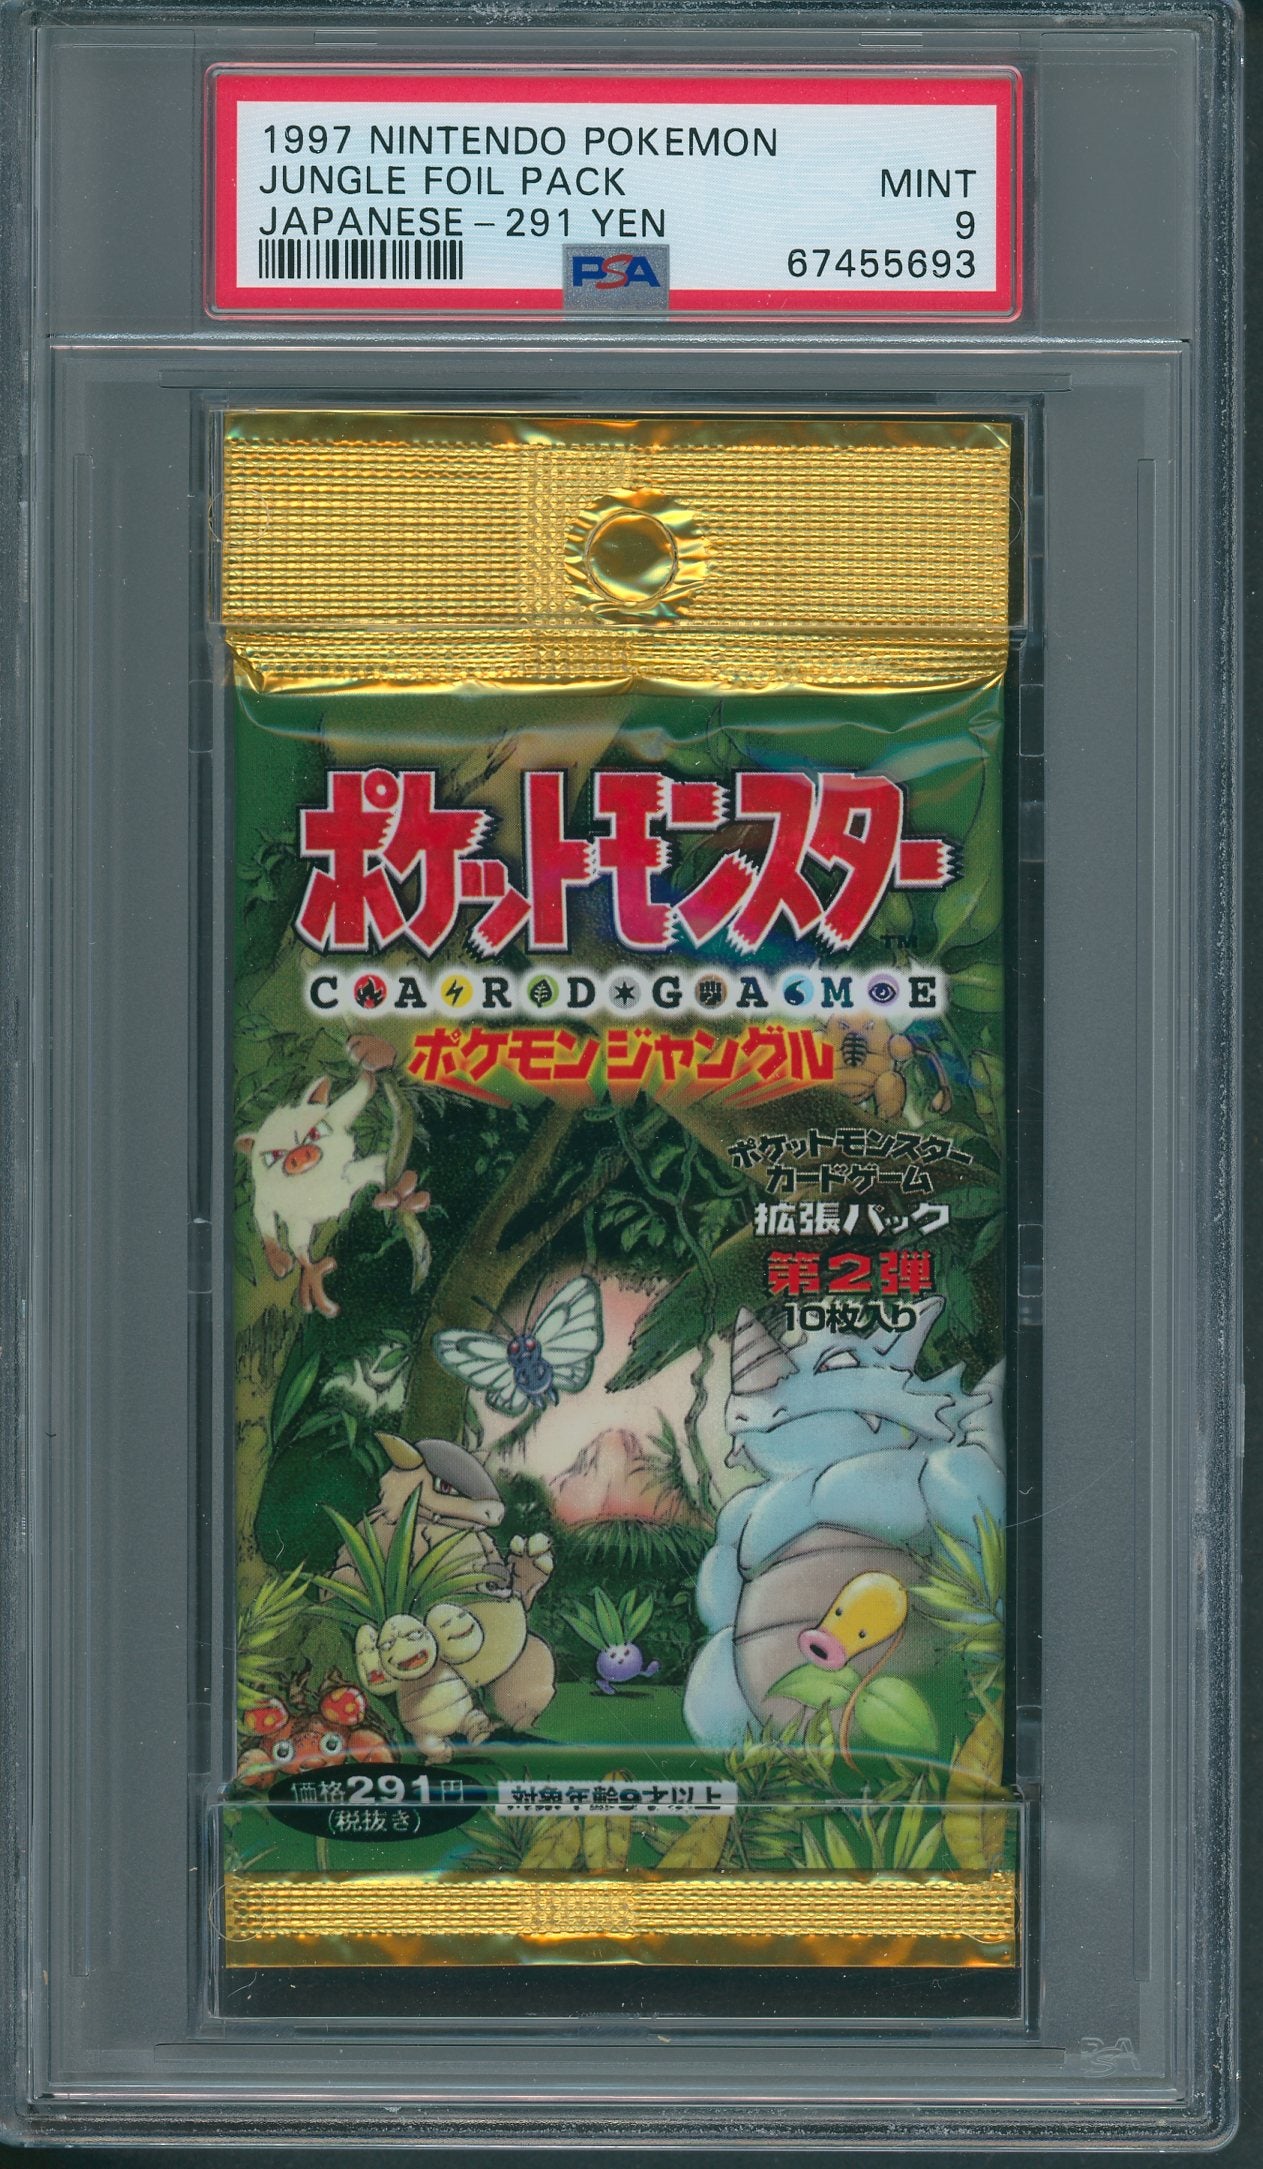 1997 Nintendo Pokemon Jungle Unopened Pack Japanese 291 Yen PSA 9 *5693